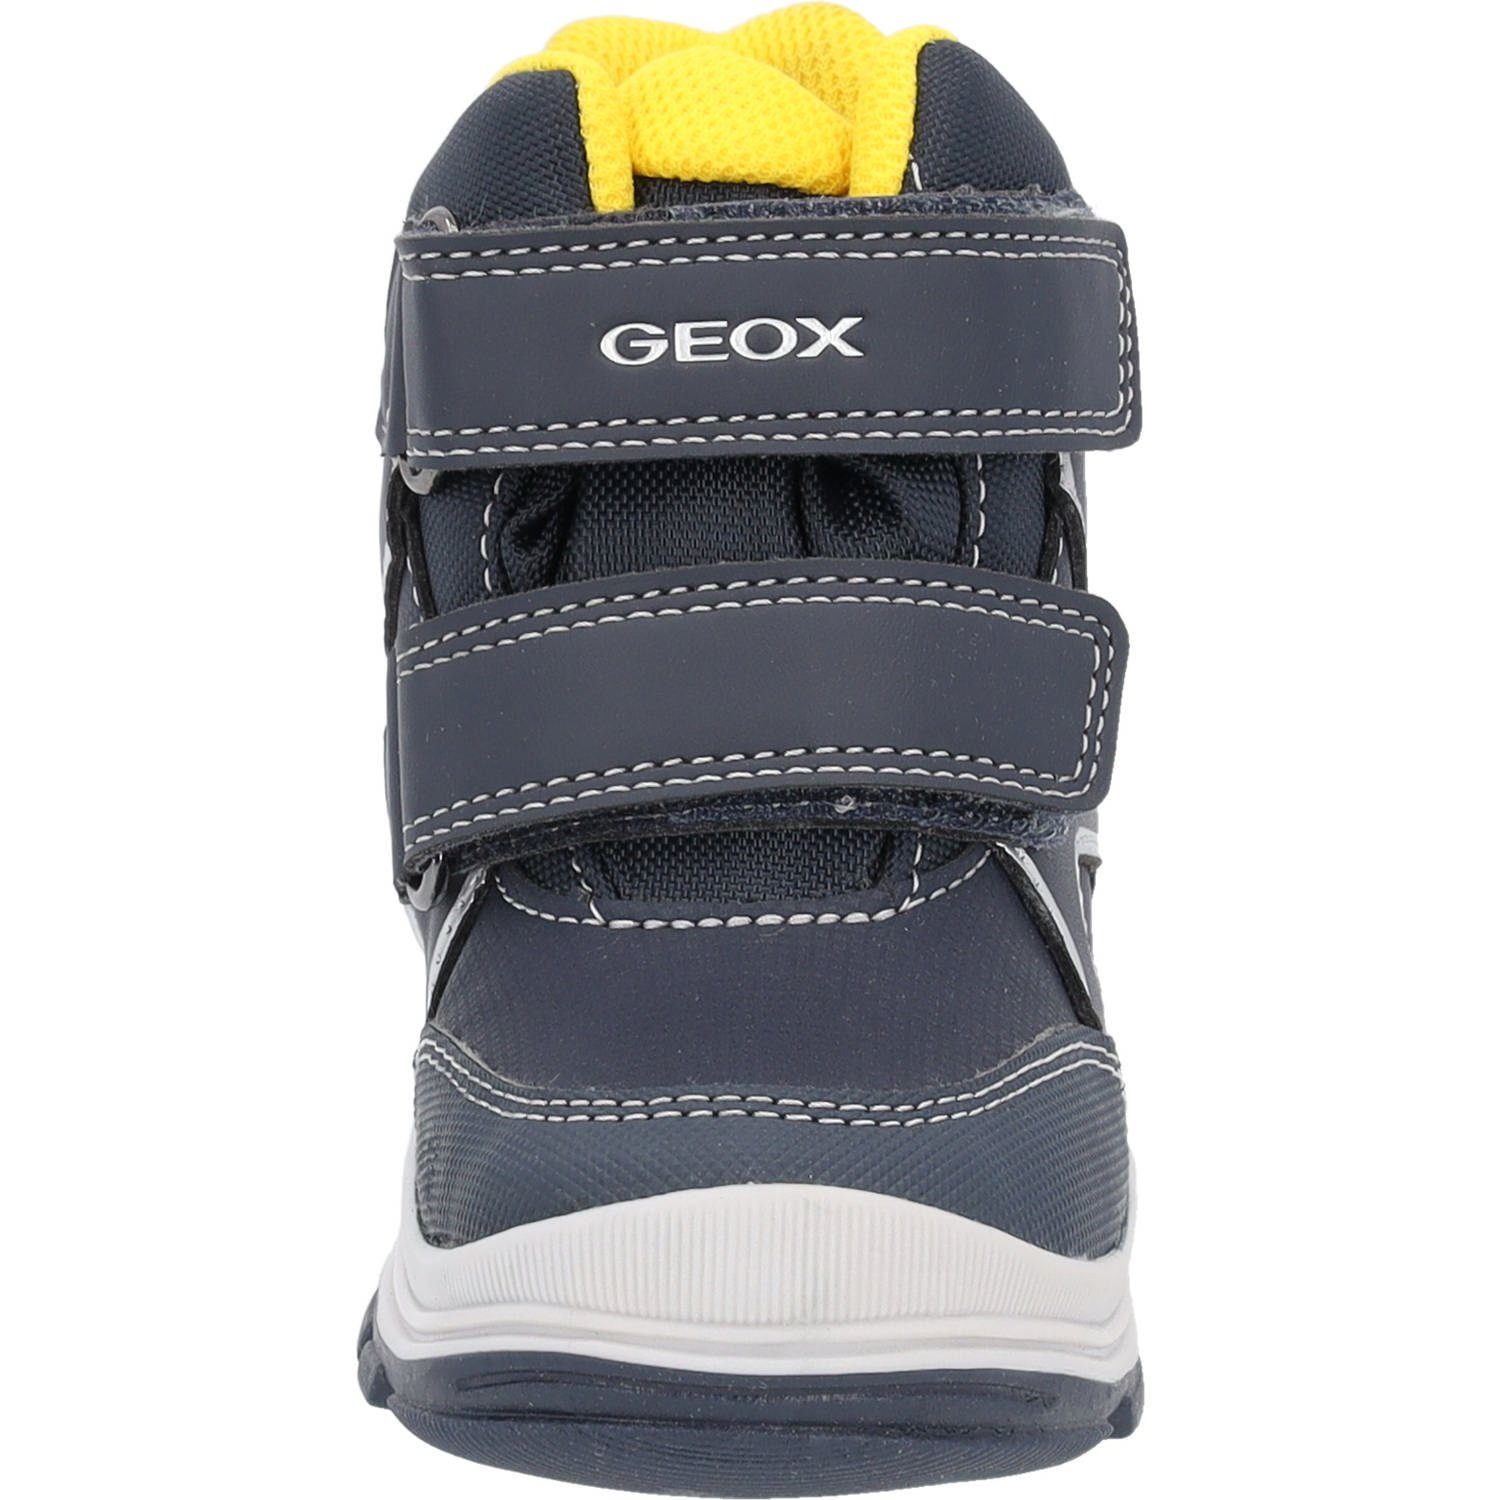 Geox Geox navy/yellow (07101986) B263VD Stiefel